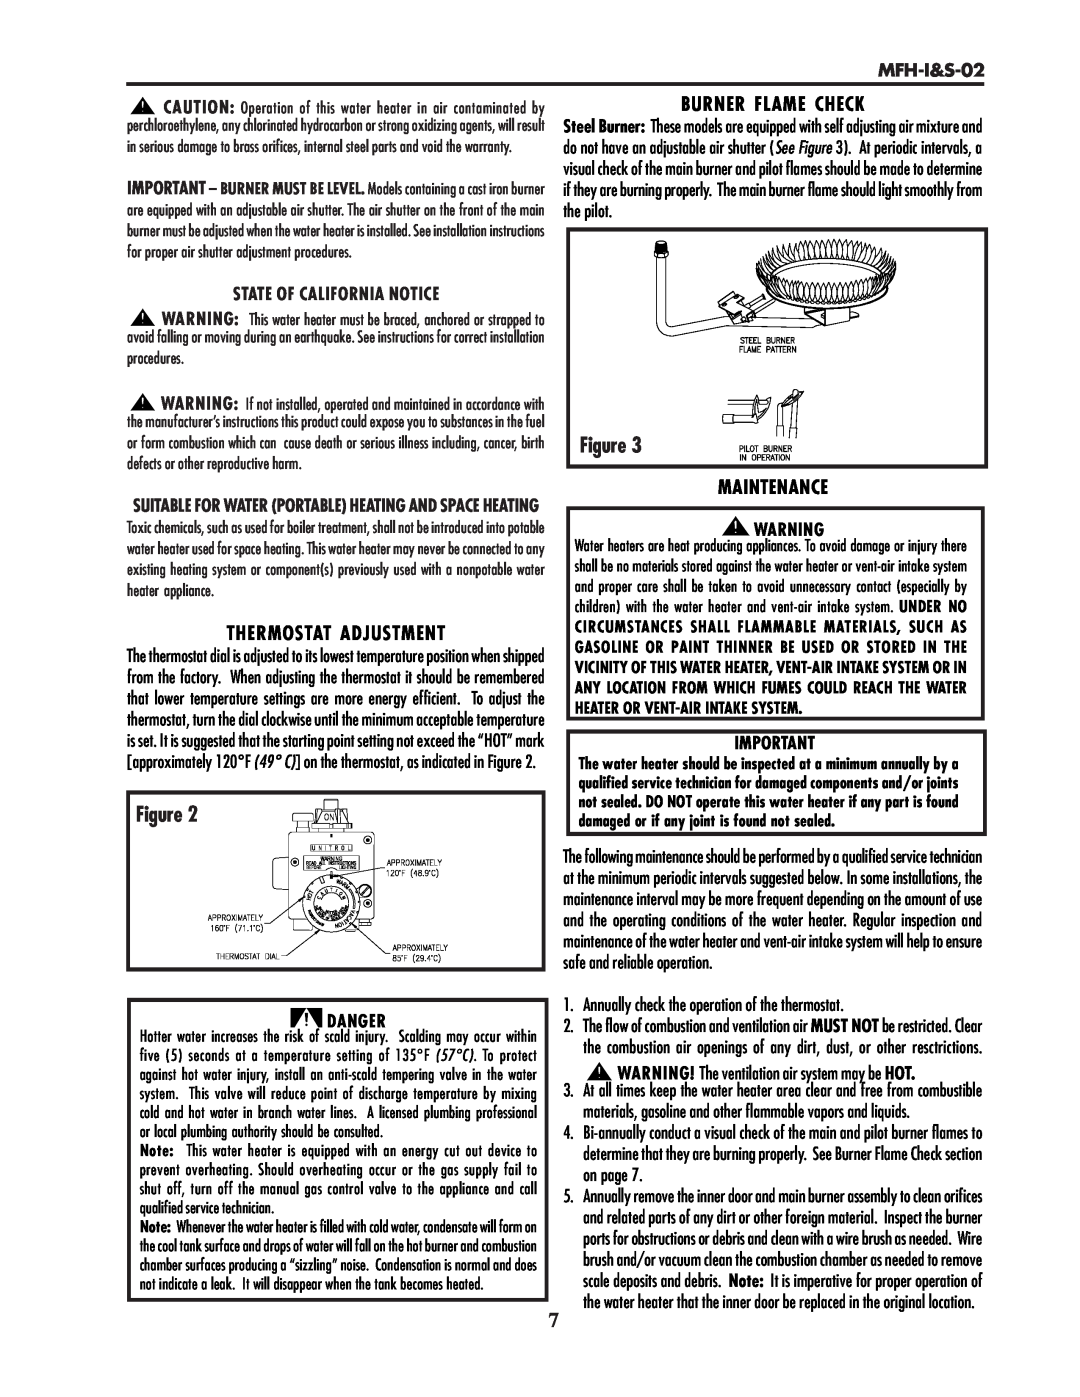 Lochinvar MFH-I&S-02 service manual Thermostat Adjustment, Burner Flame Check, Maintenance, State Of California Notice 